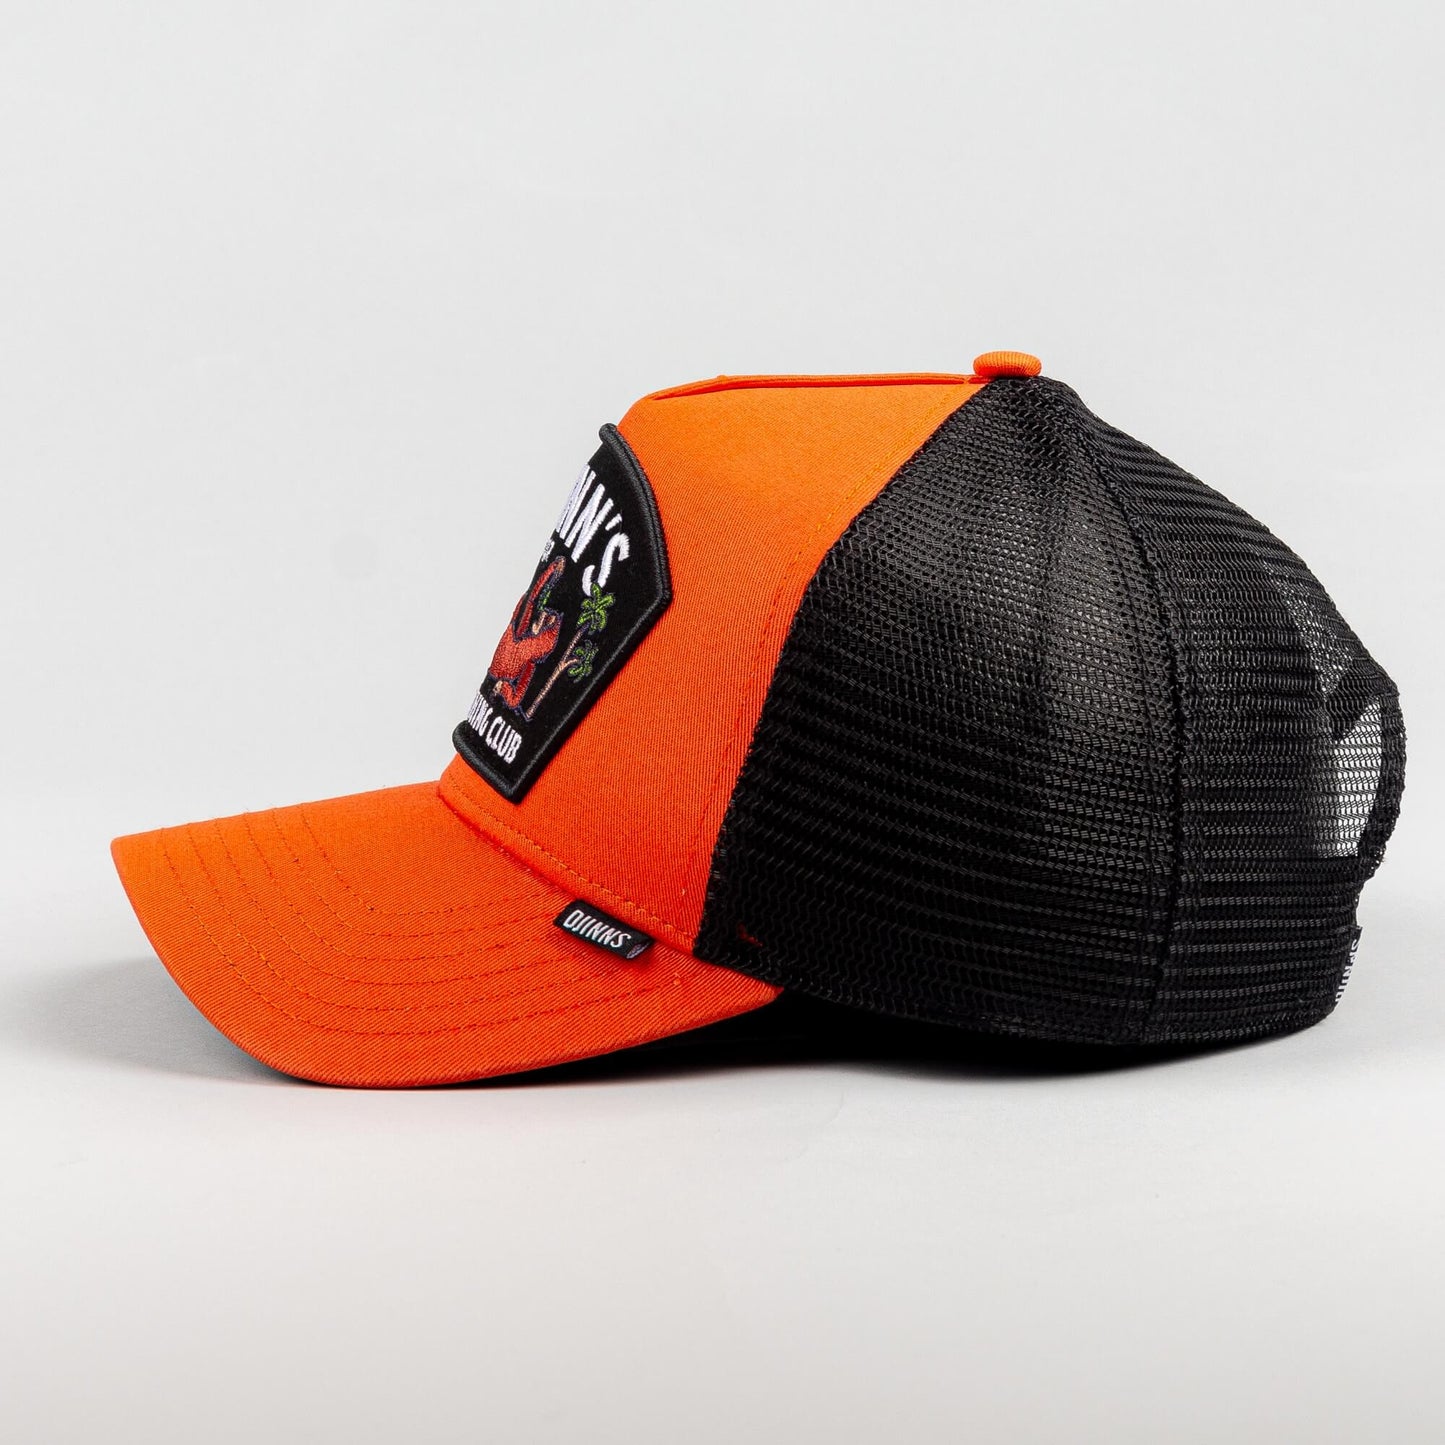 DJINN’S HFT Cap DNC Sloth orange/black